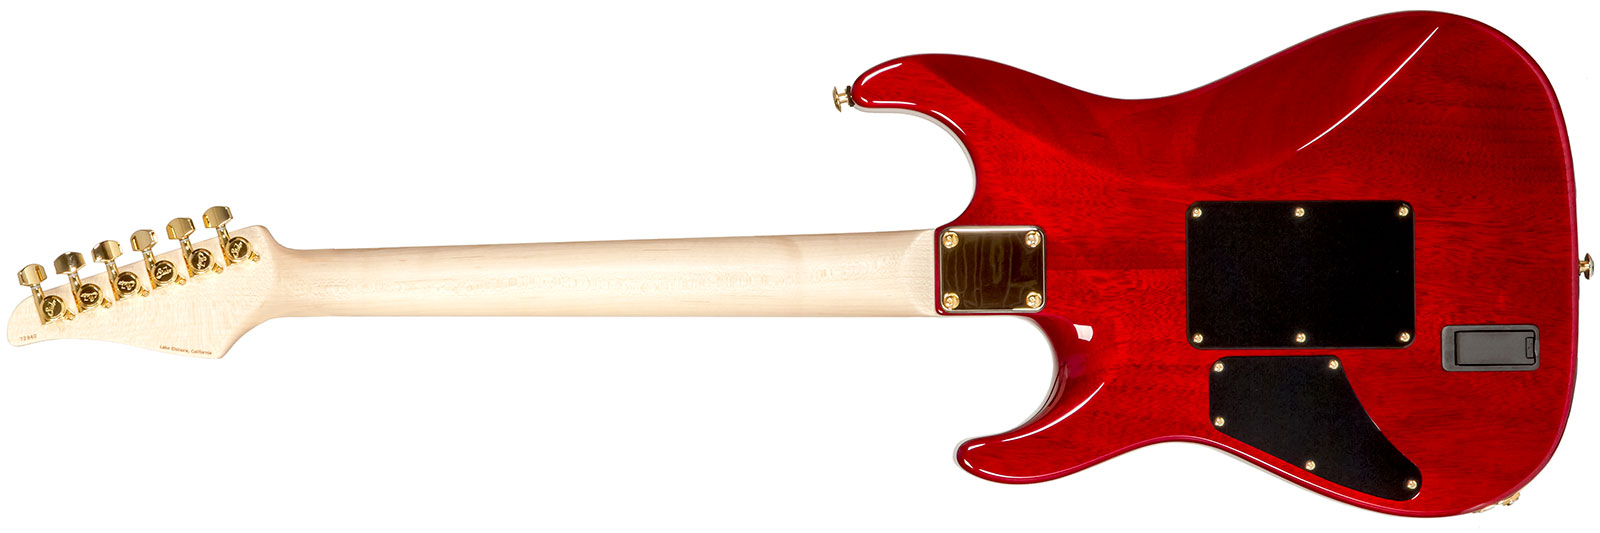 Suhr Standard Legacy 01-ltd-0030 Hss Emg Fr Rw #72940 - Aged Cherry Burst - Guitare Électrique Forme Str - Variation 1